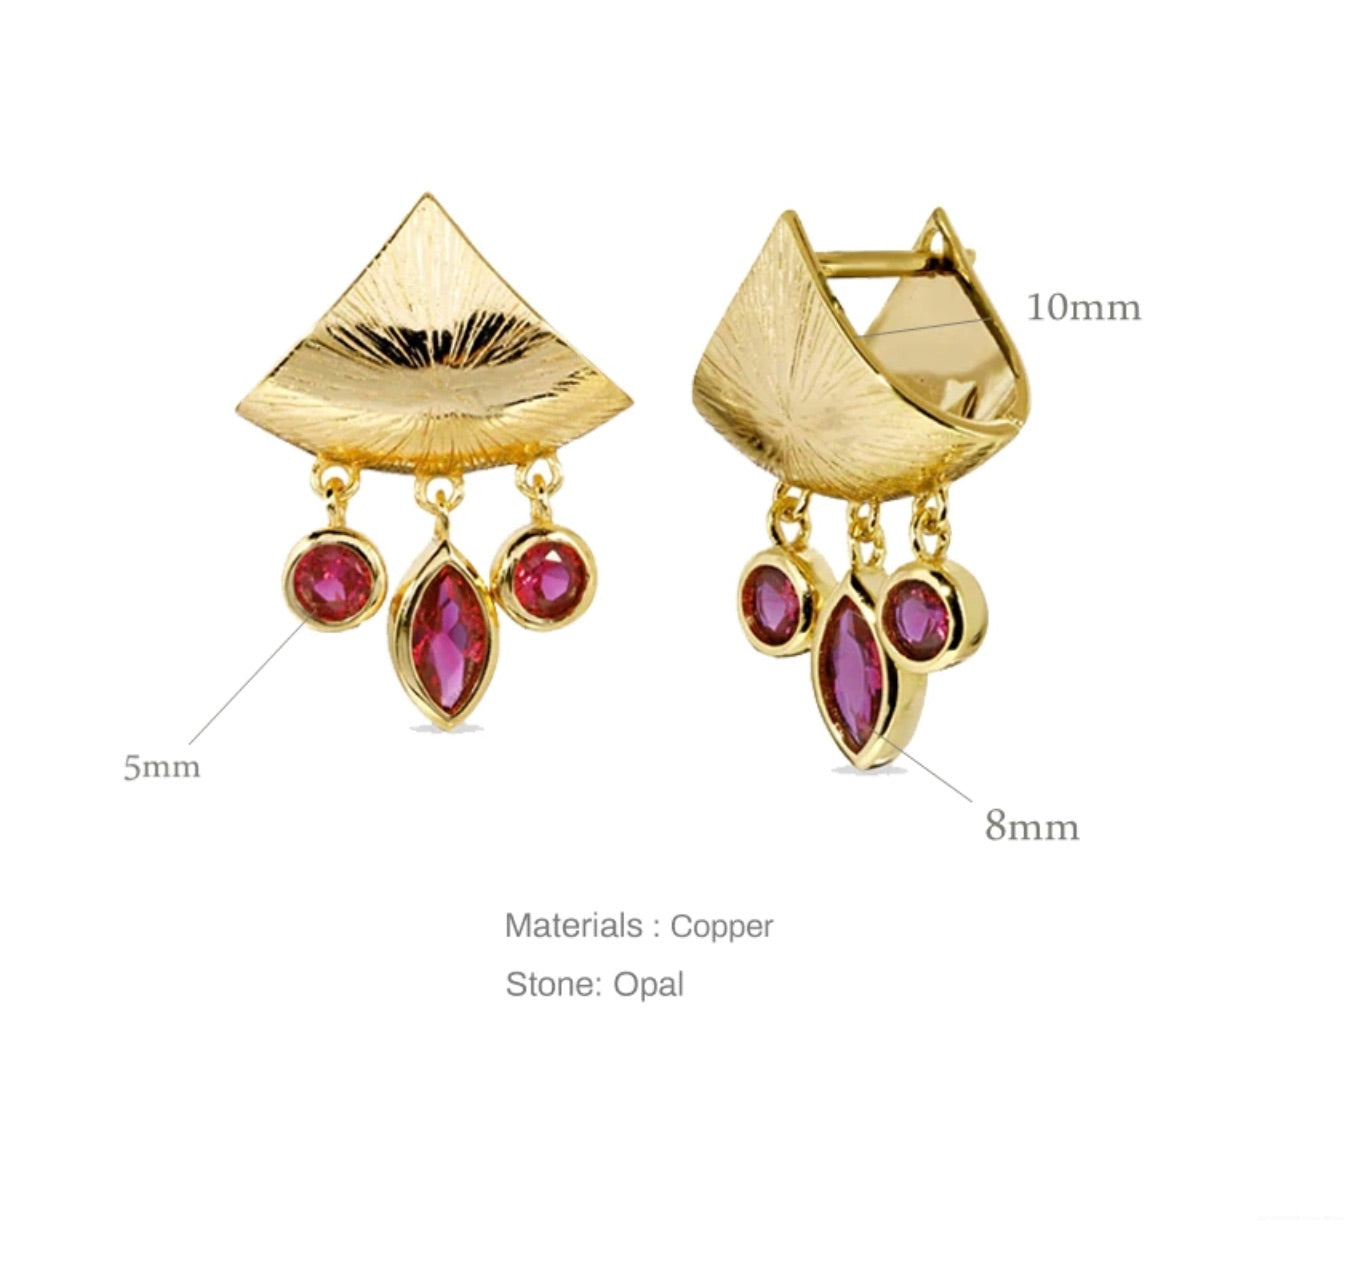 Buy Gold Plated Hoop Statement Earrings Online. – Odette